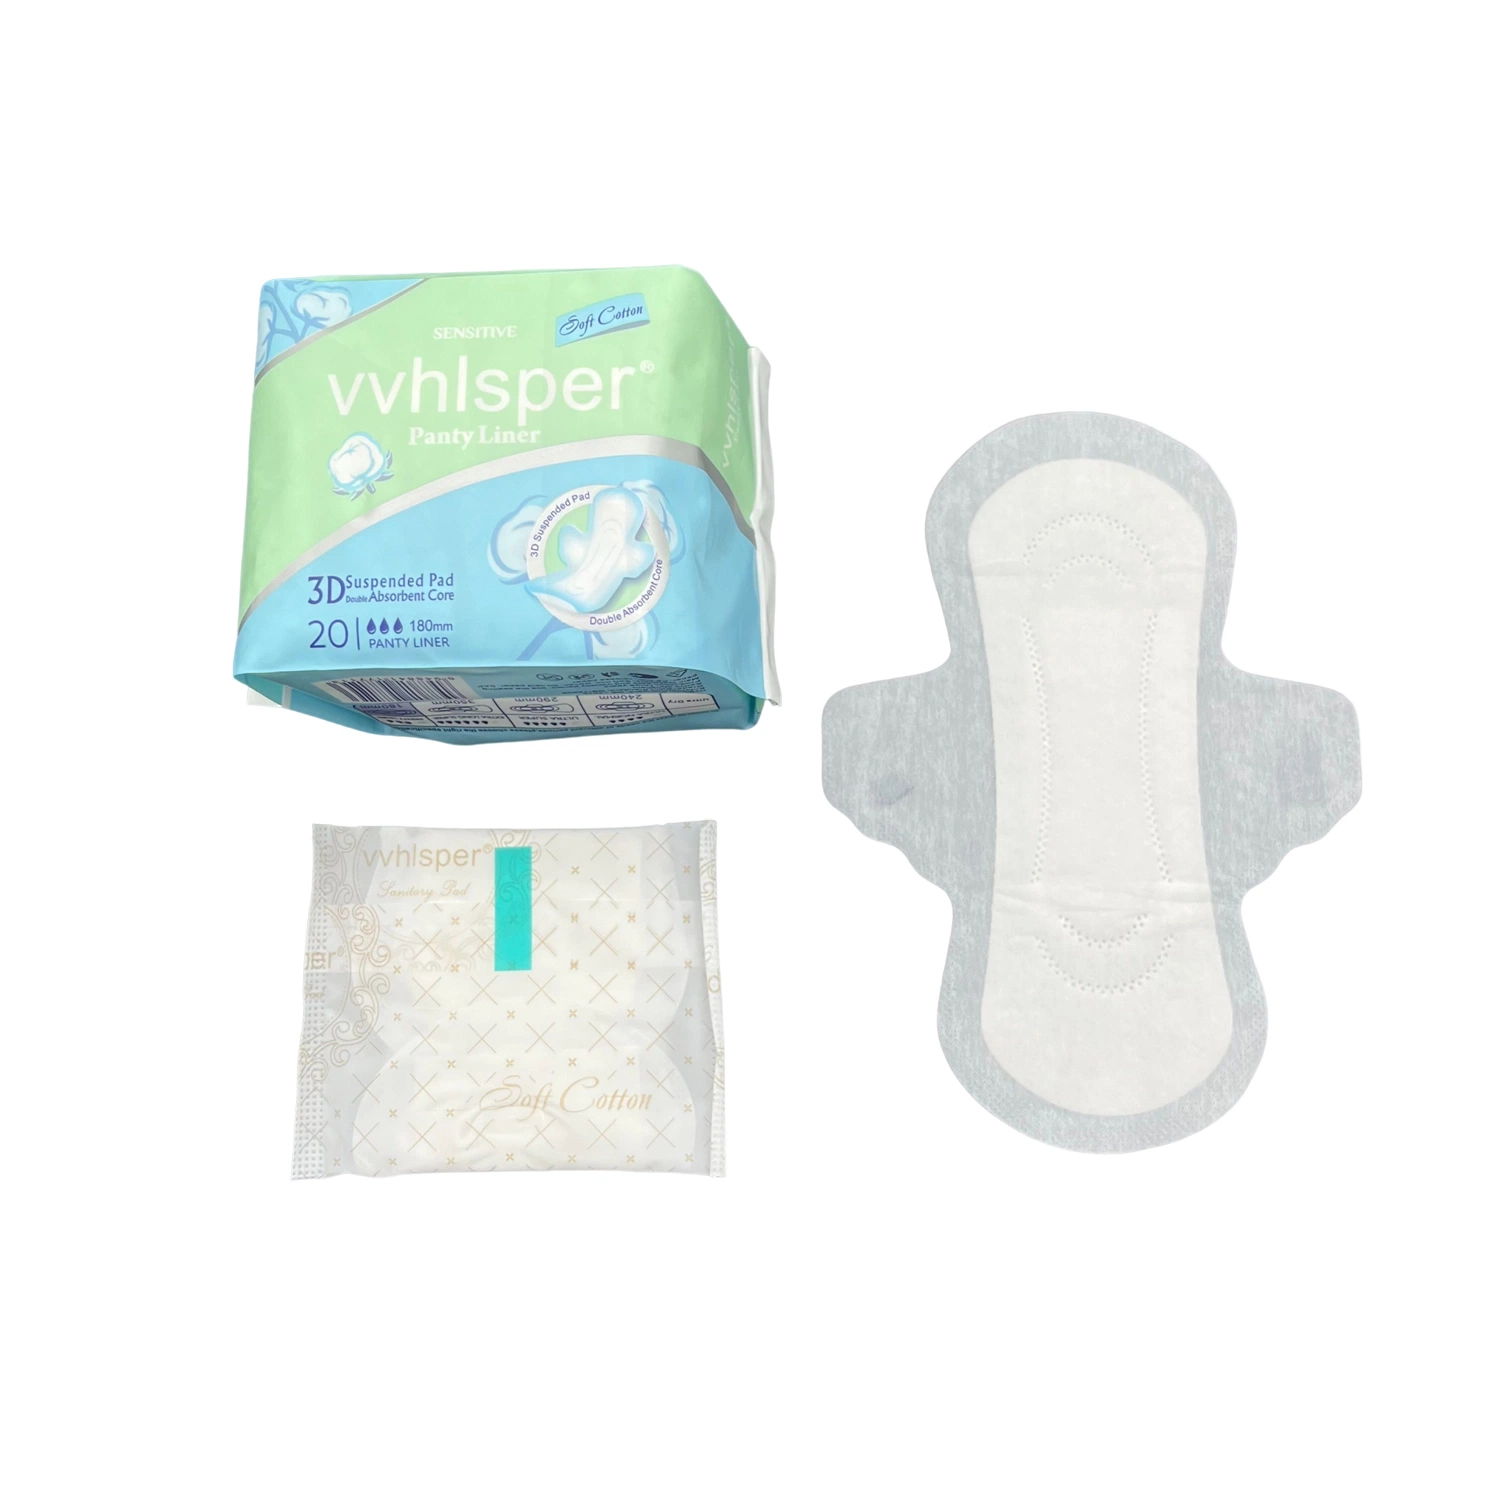 Almofada higiénicos descartáveis para uso adulto Vvhlsper guardanapo cuidados naturais produtos de higiene para mulher